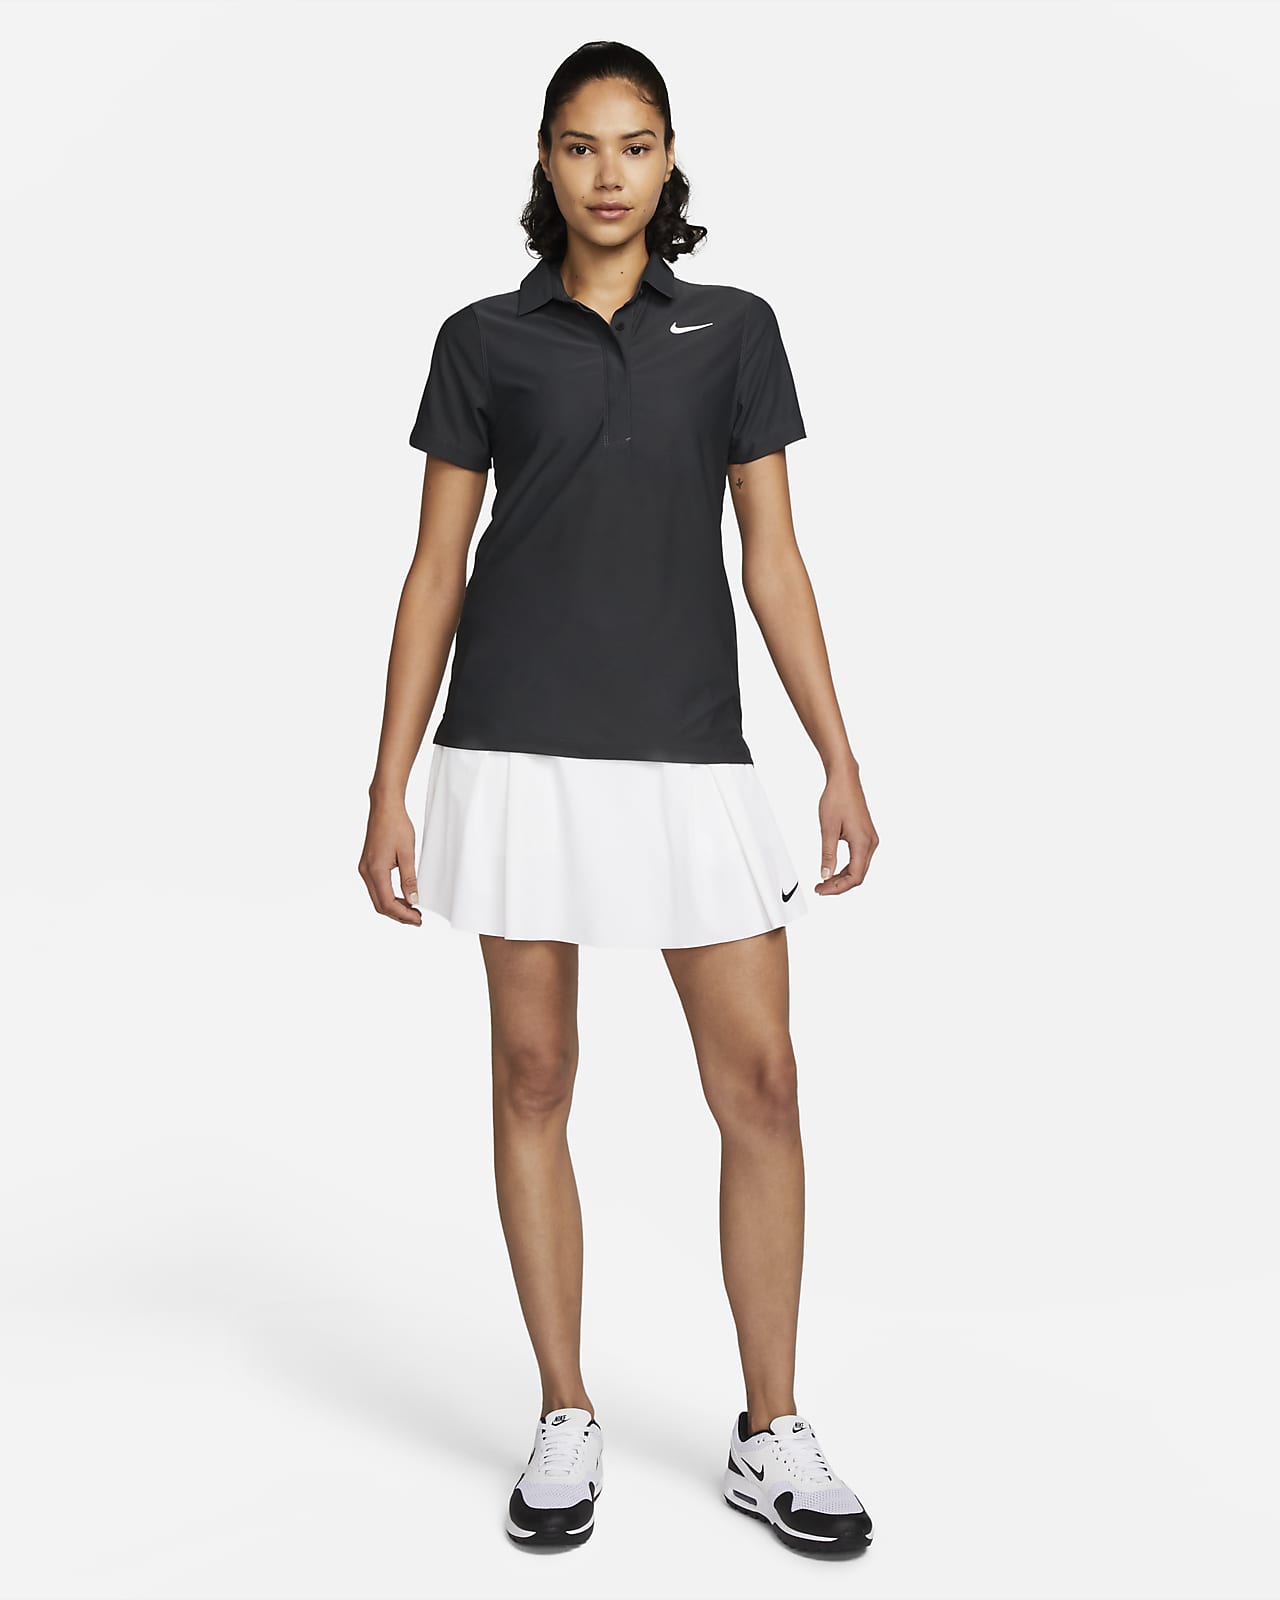 Nike Dri-FIT ADV Tour Women's Short-Sleeve Golf Polo.